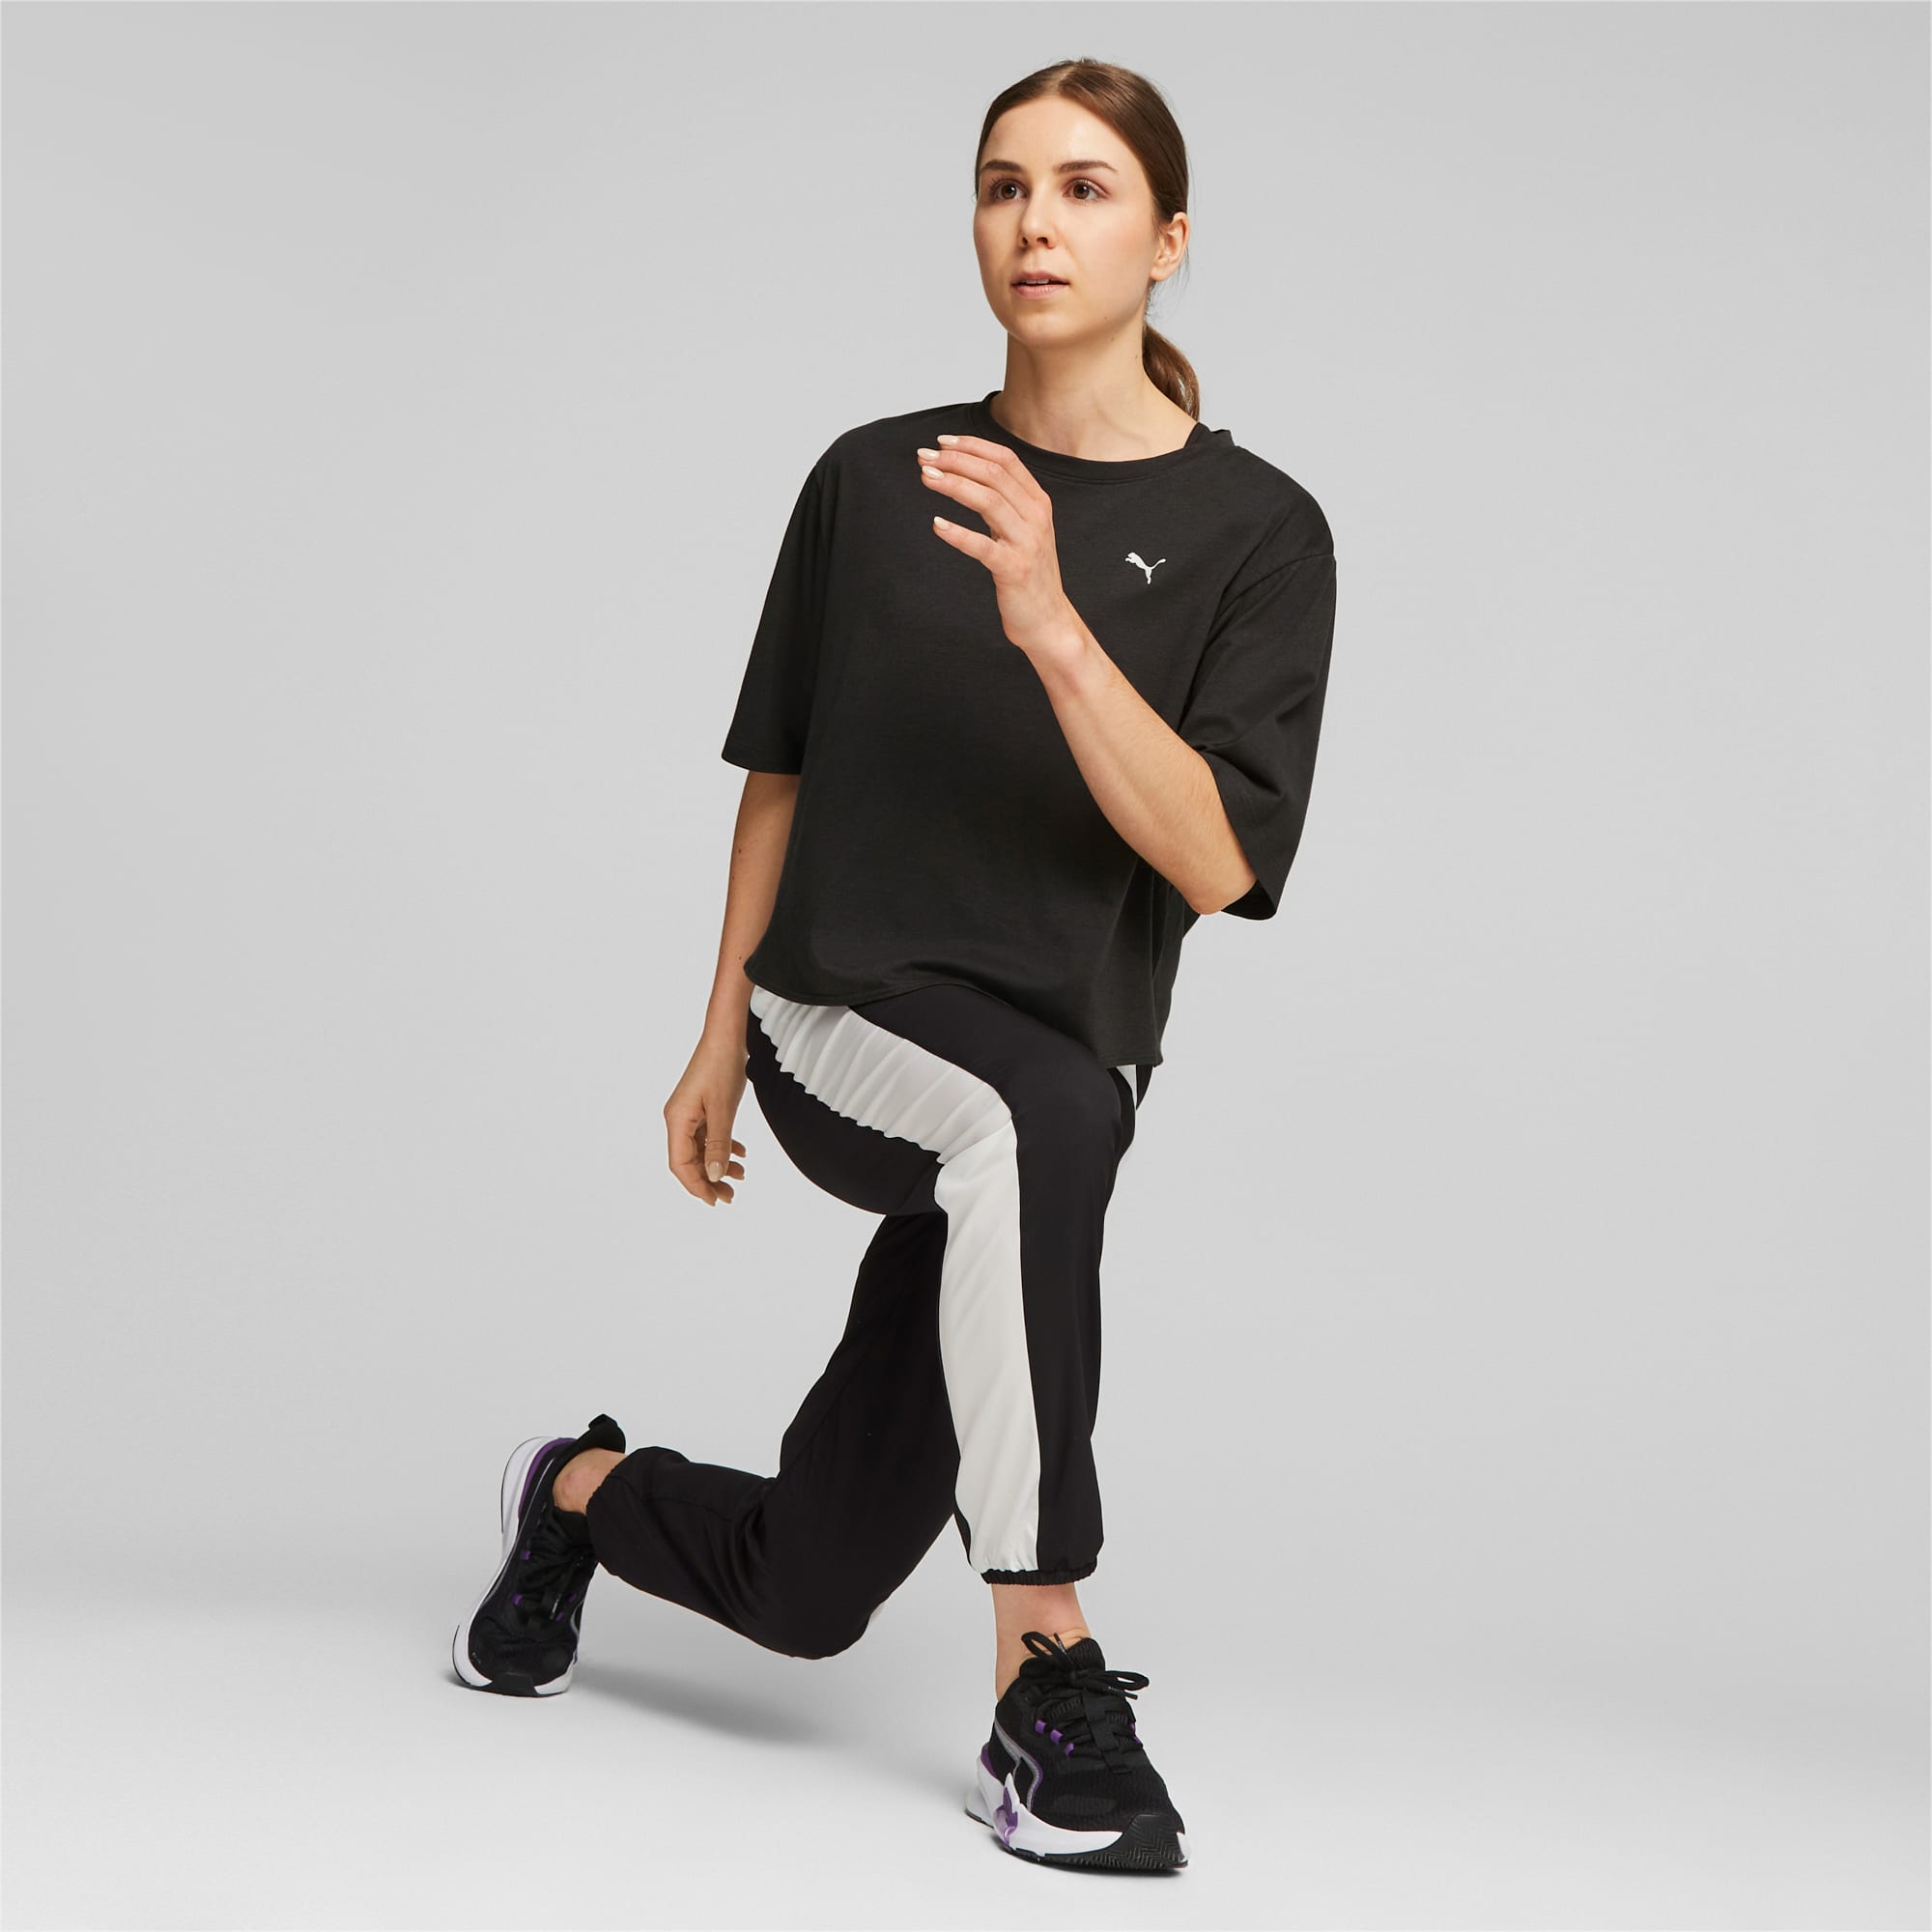 Joviren Cotton Workout Crop Top for Women Racerback Yoga Tank Tops